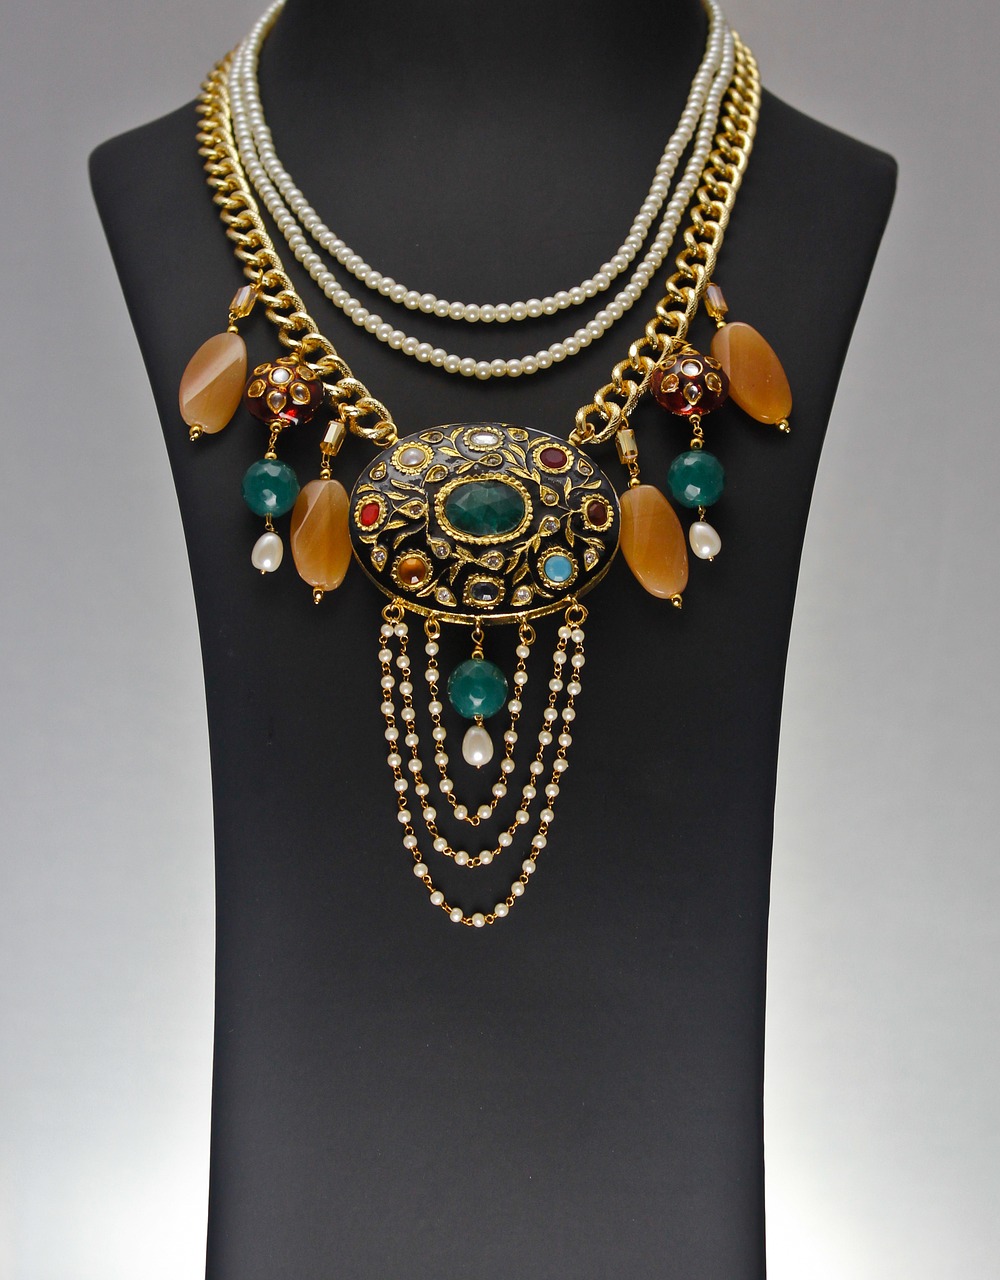 stone jewelry necklace photoshoot free photo